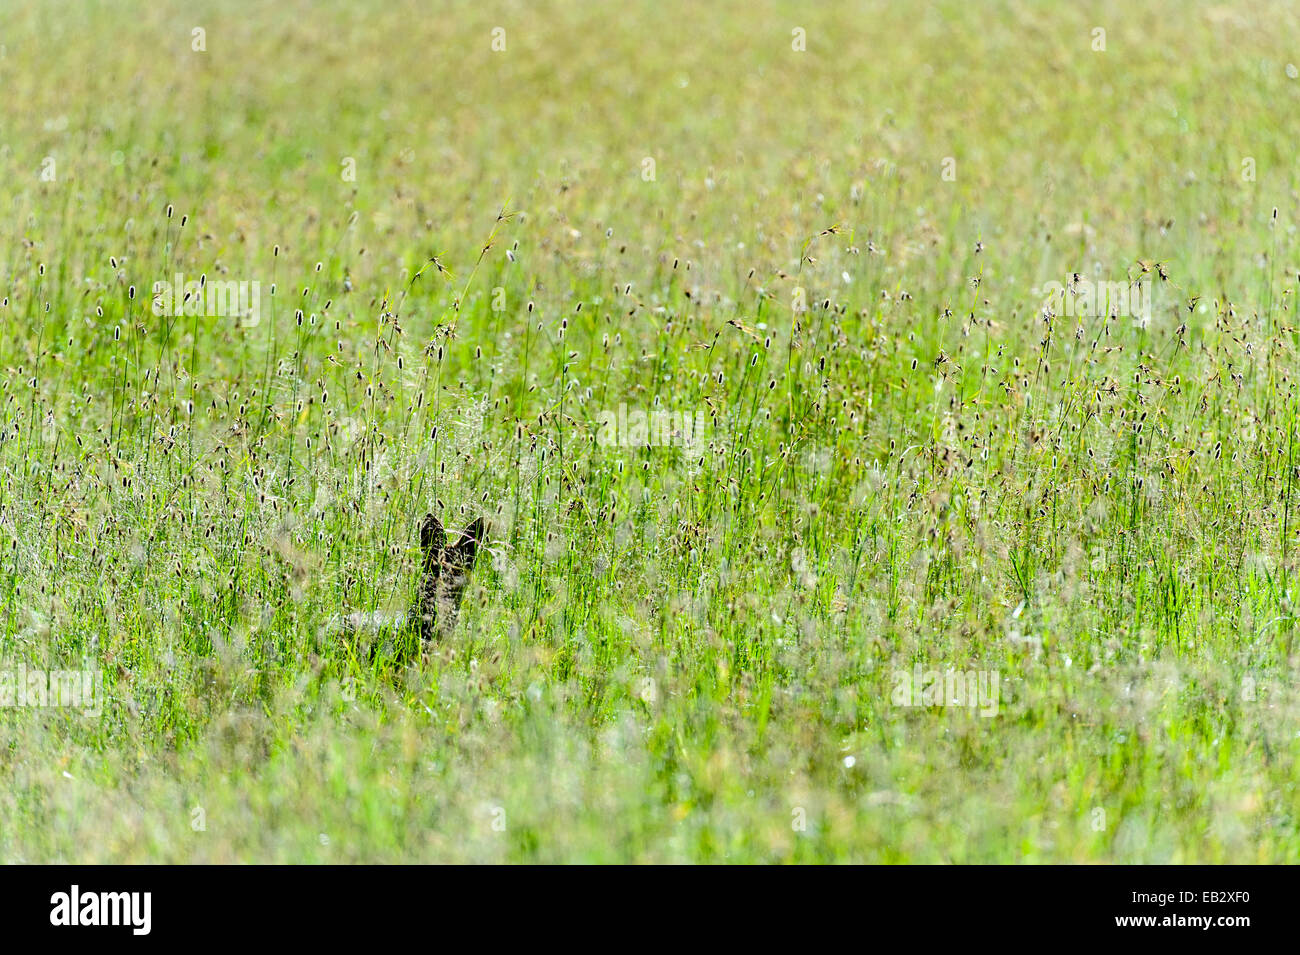 An alert Black-backed Jackal pokes up above seeding grasses while hunting on a savannah plain. Stock Photo